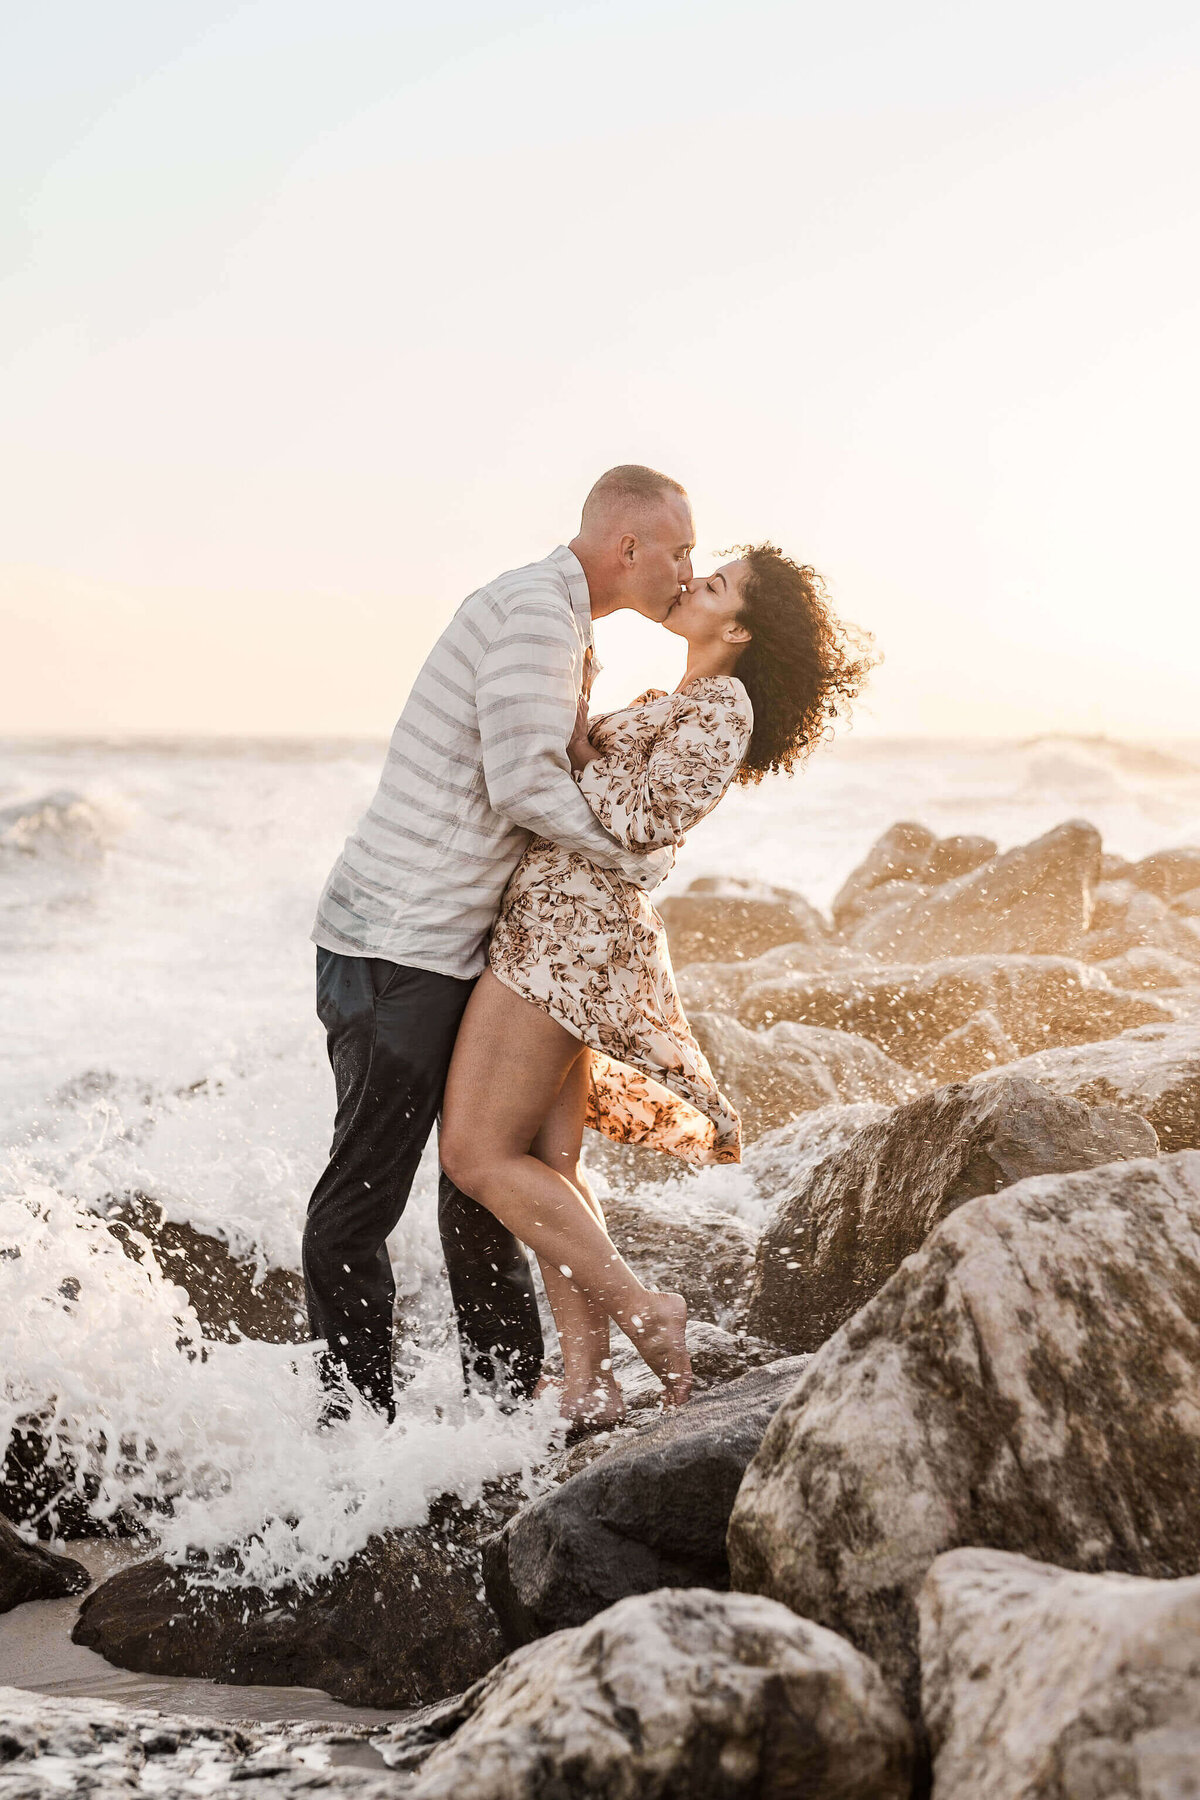 Beach-Engagement-Photos-Wedding-Photographer-Videographer-Mobile-AL-Birmingham-Engagement-Orange-Beach-Alabama-Point-The-Pass-Nick-Sarylee-Sunset-Rocks-Wave-Crashing-During-Kiss